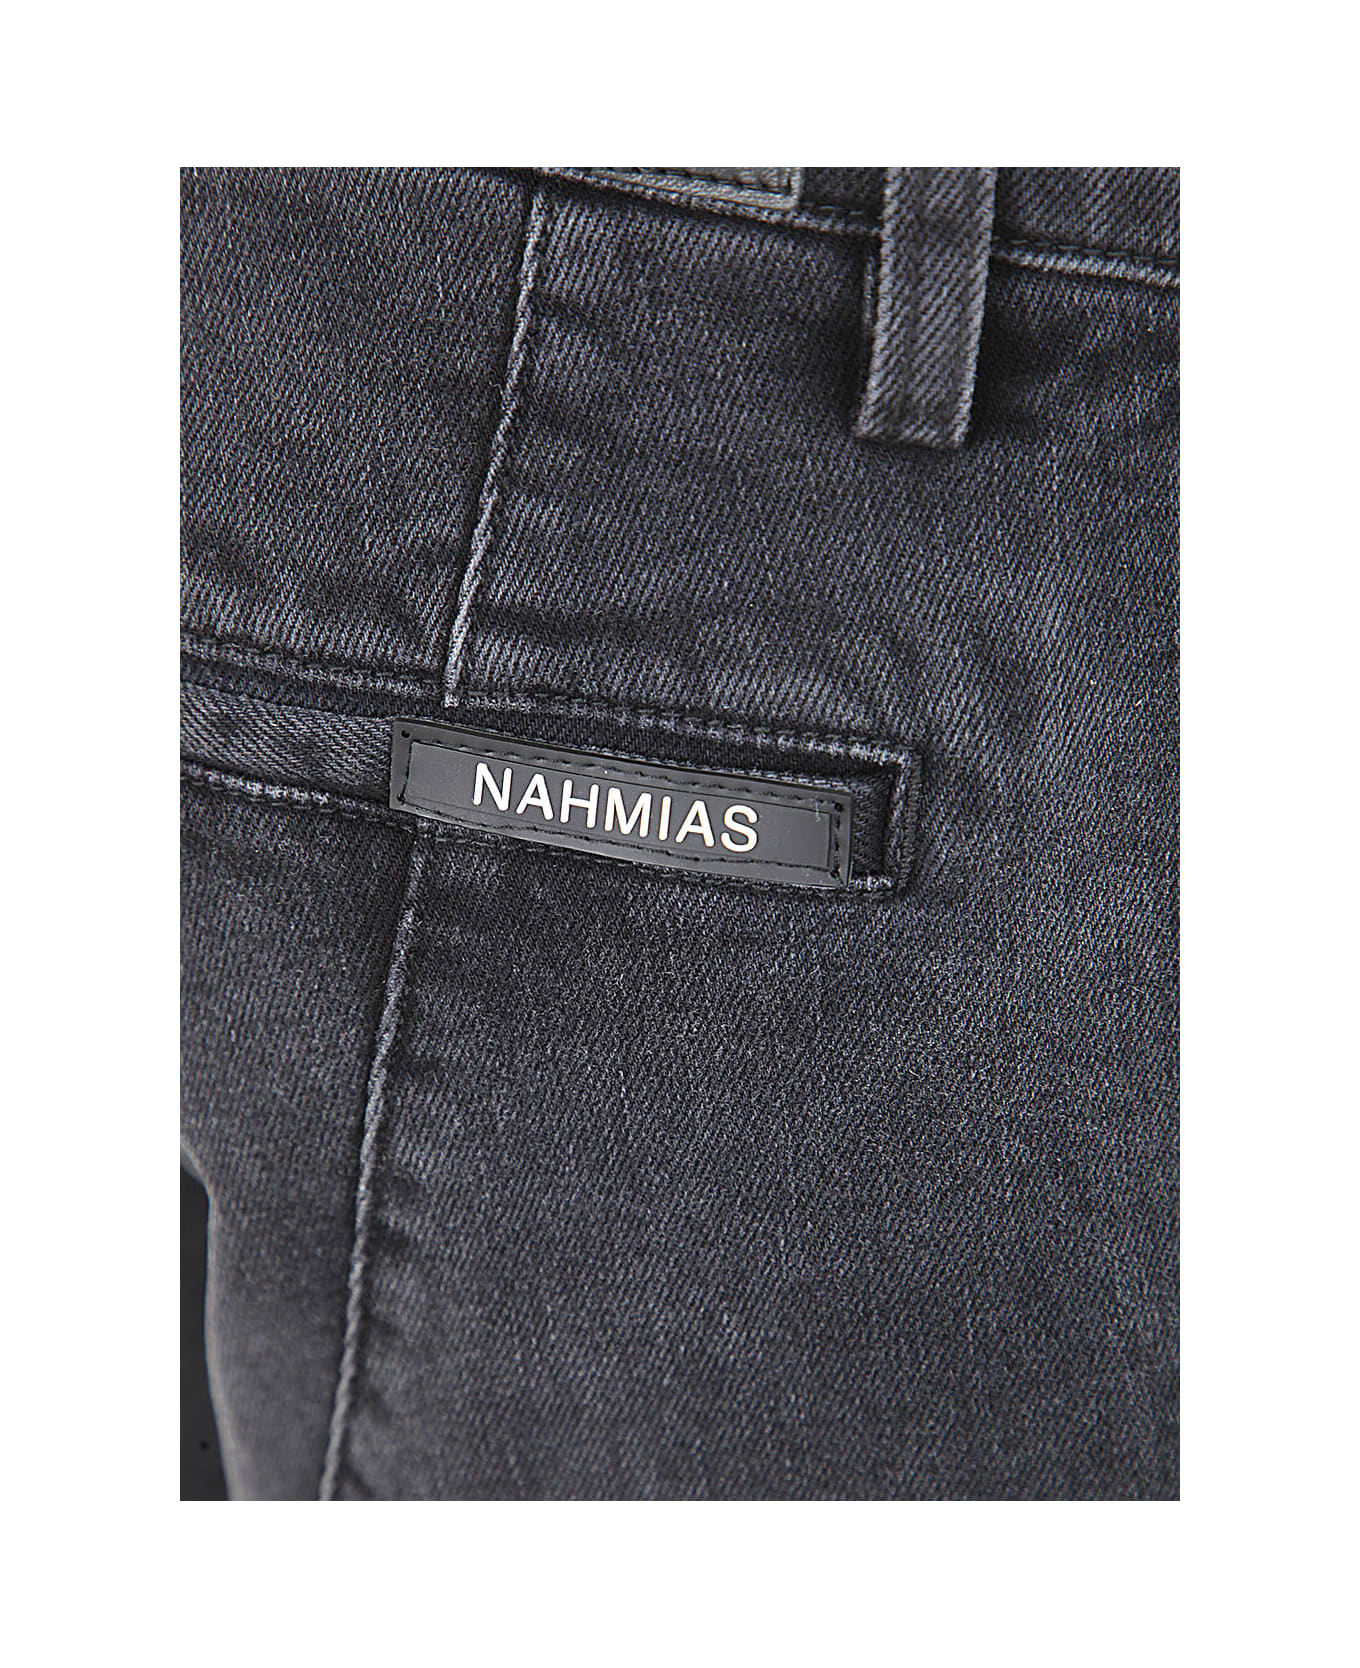 Nahmias Denim Sunshine Jeans - Charcoal Wash デニム